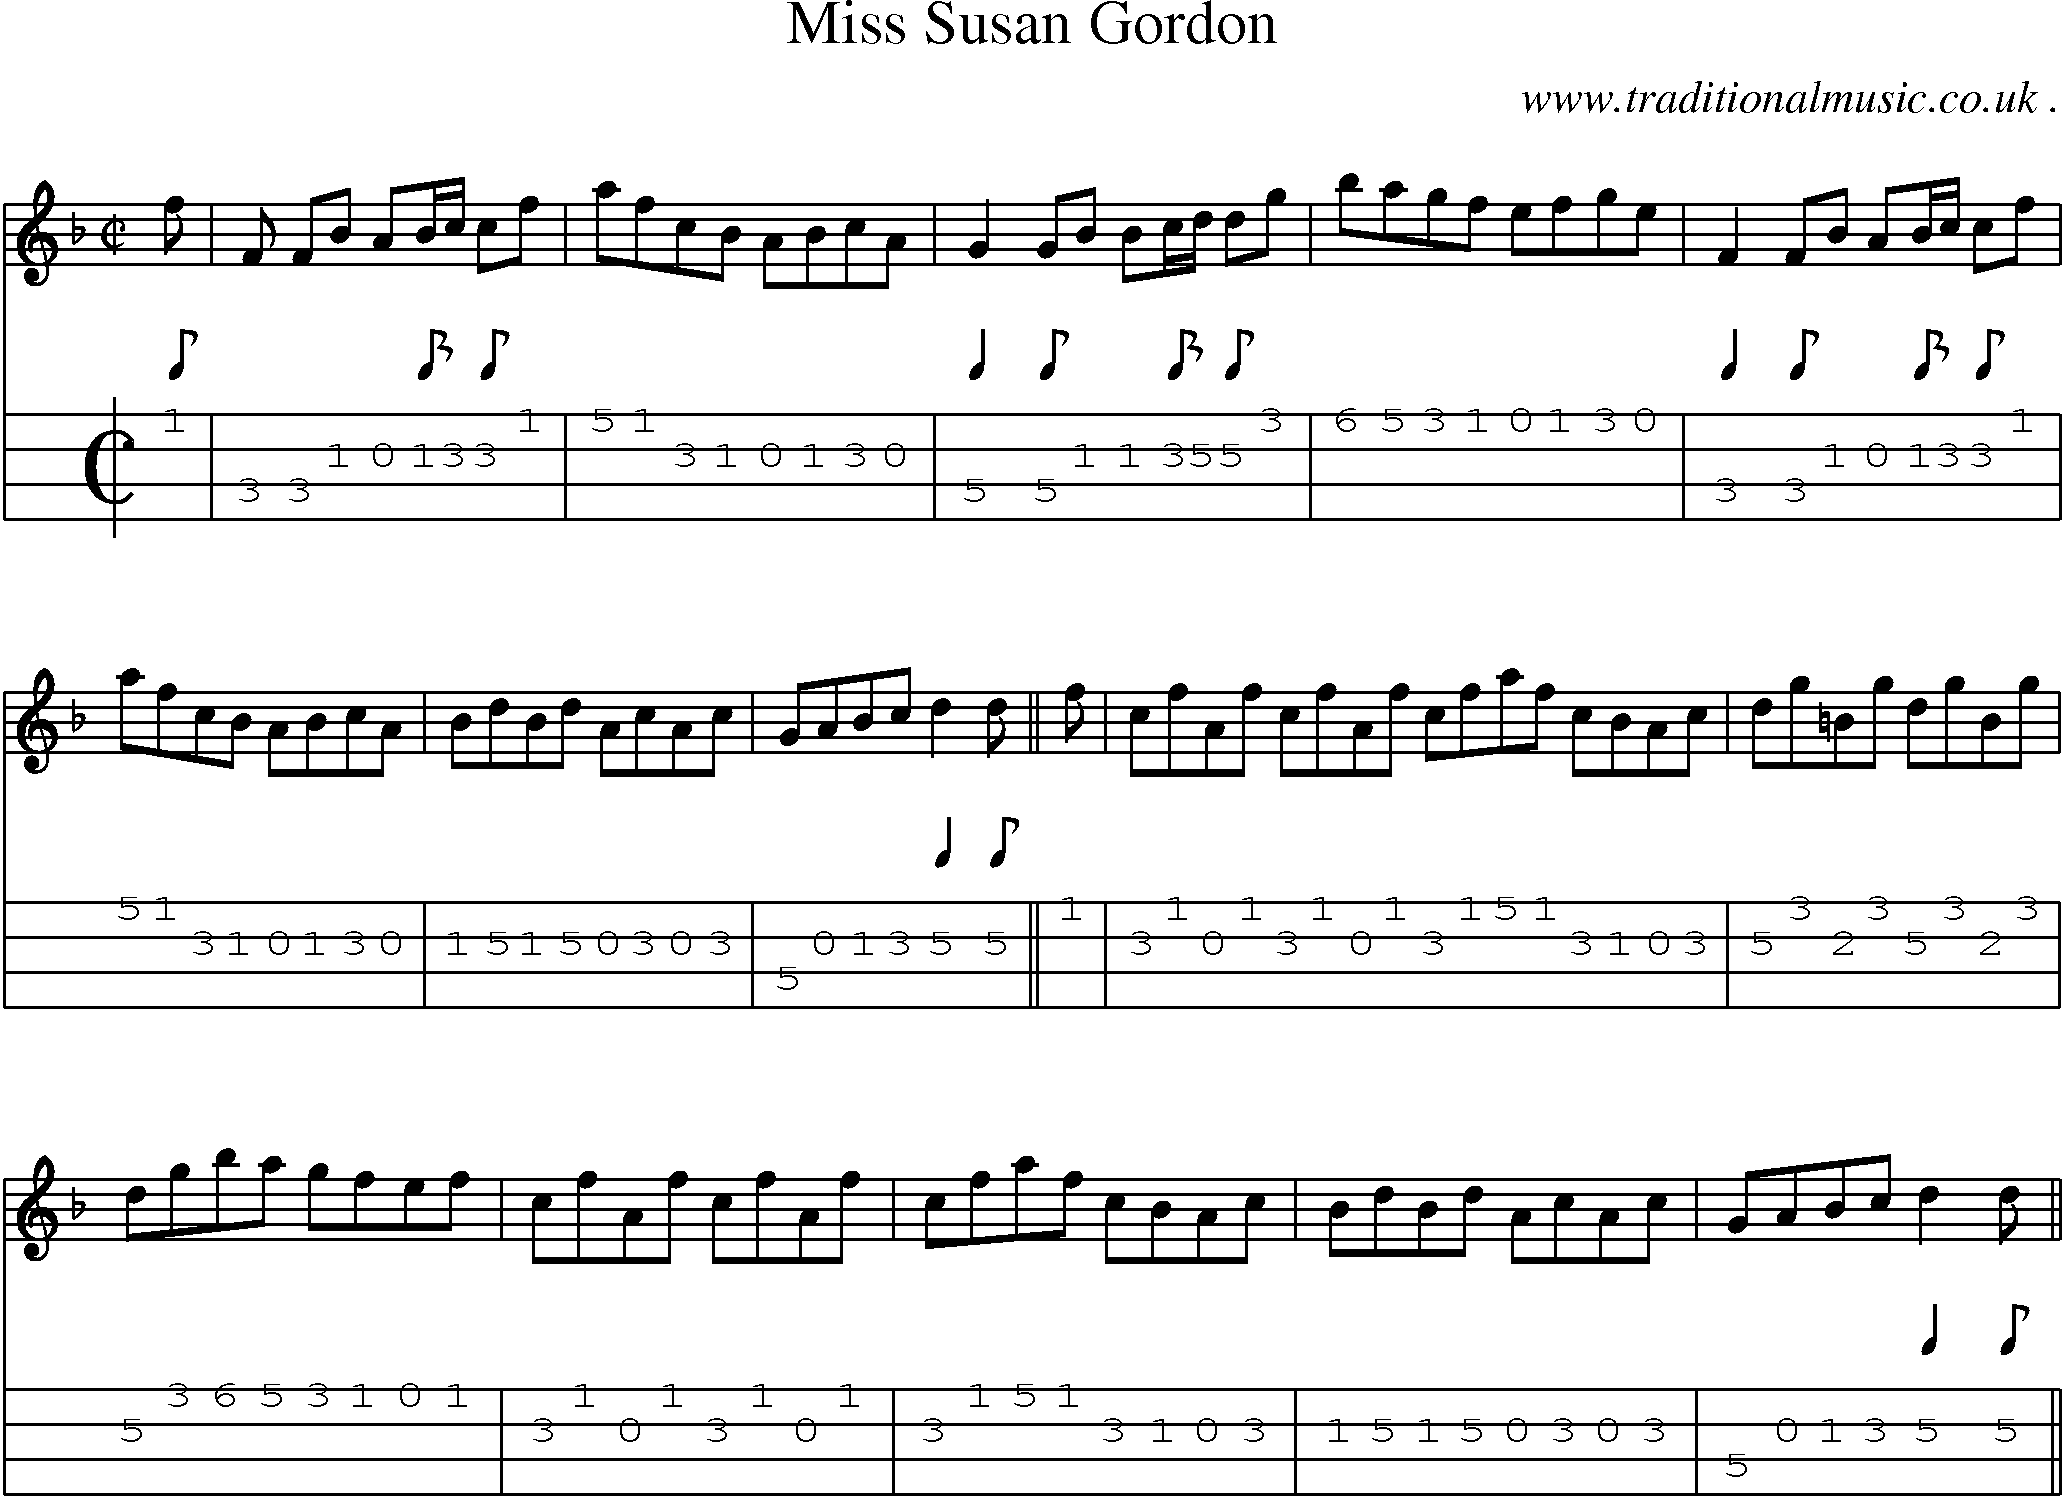 Sheet-music  score, Chords and Mandolin Tabs for Miss Susan Gordon